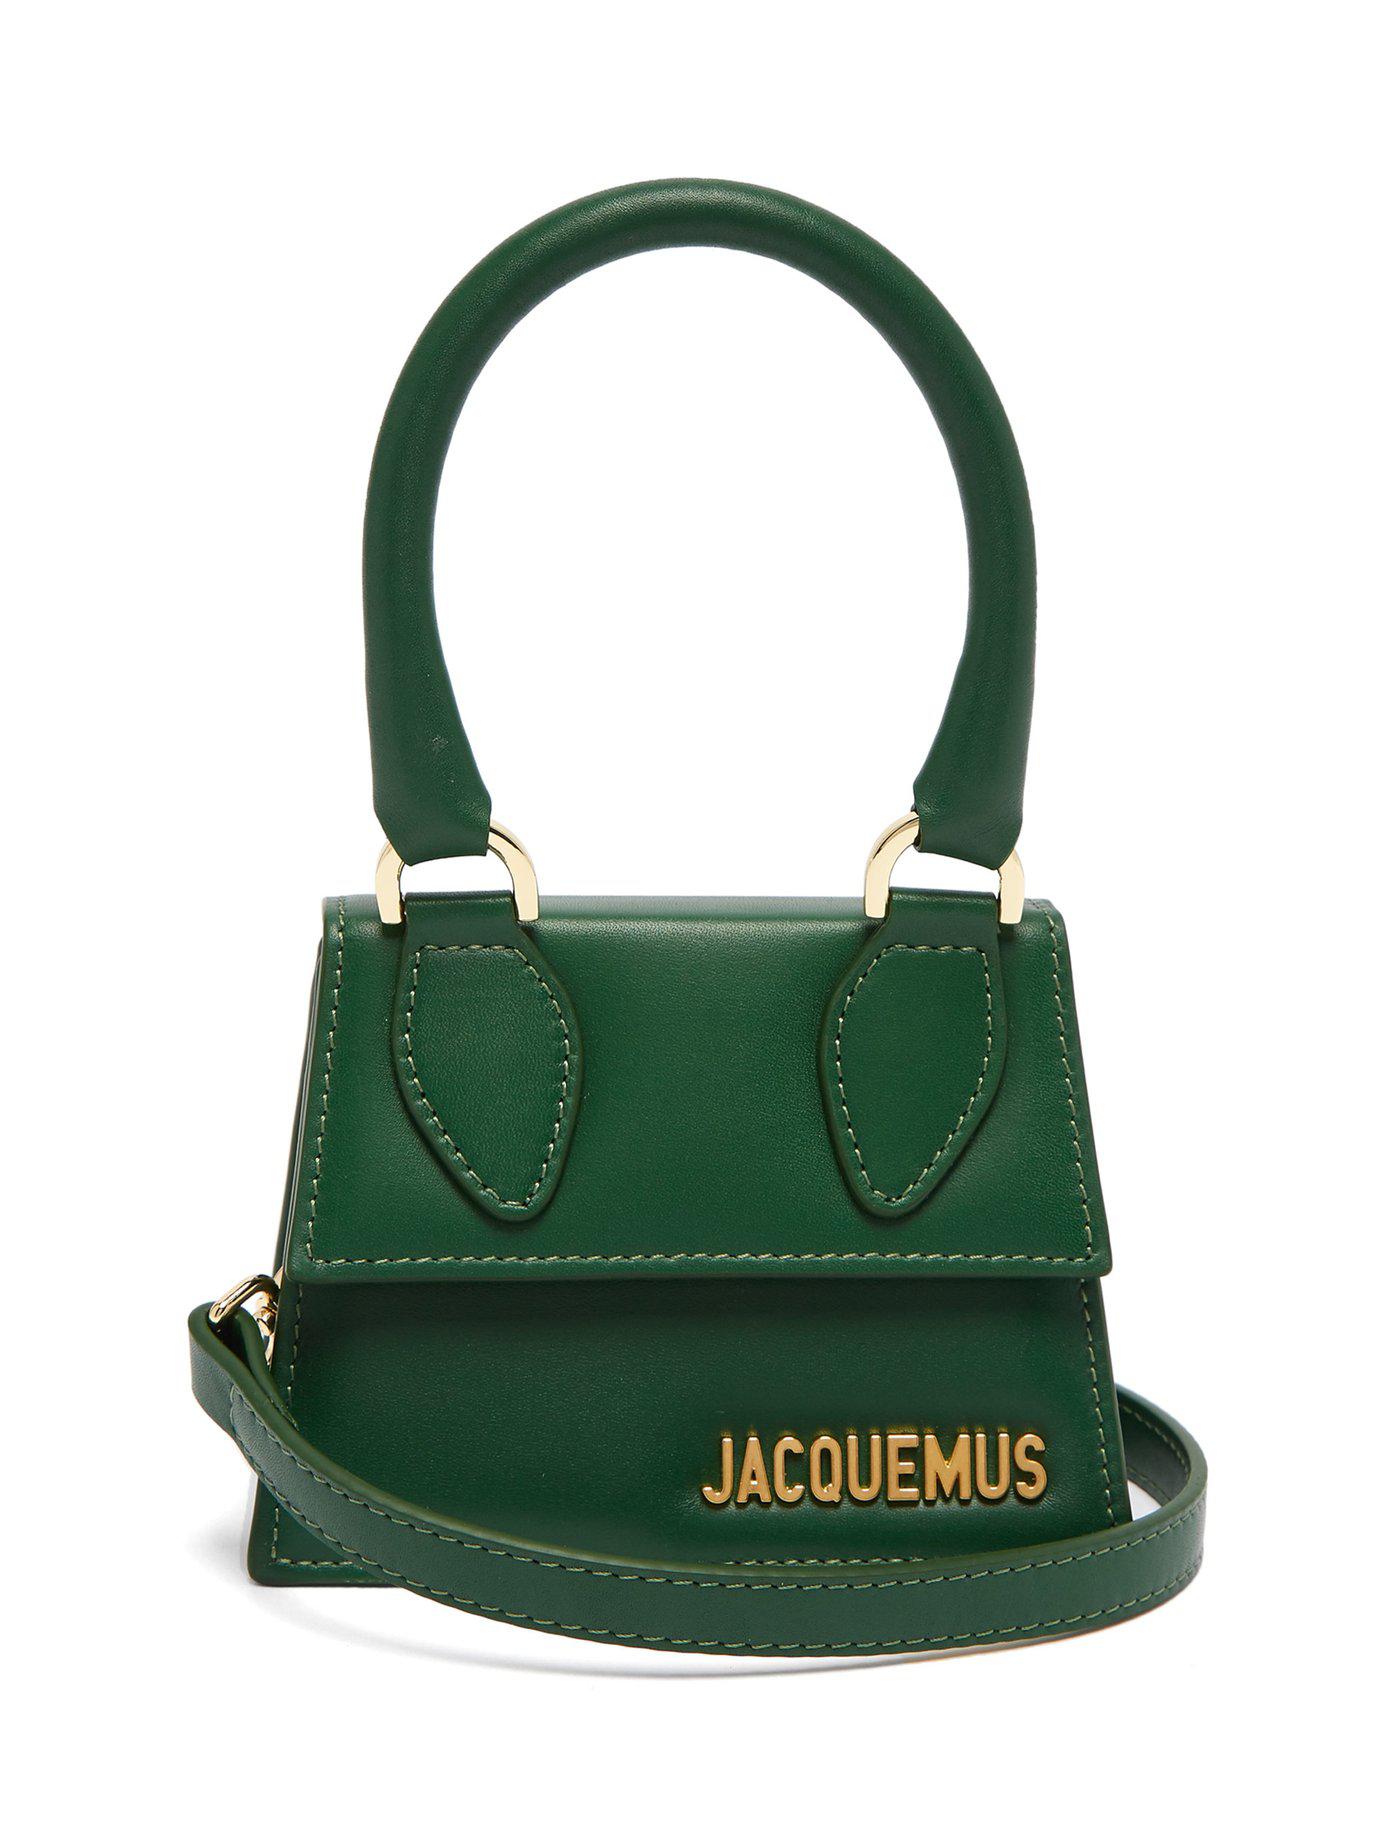 Микро сумка. Микро сумка Jacquemus. Jacquemus сумка зеленая. Жакмюс сумка. Jacquemus сумка зеленая ДЛТ.